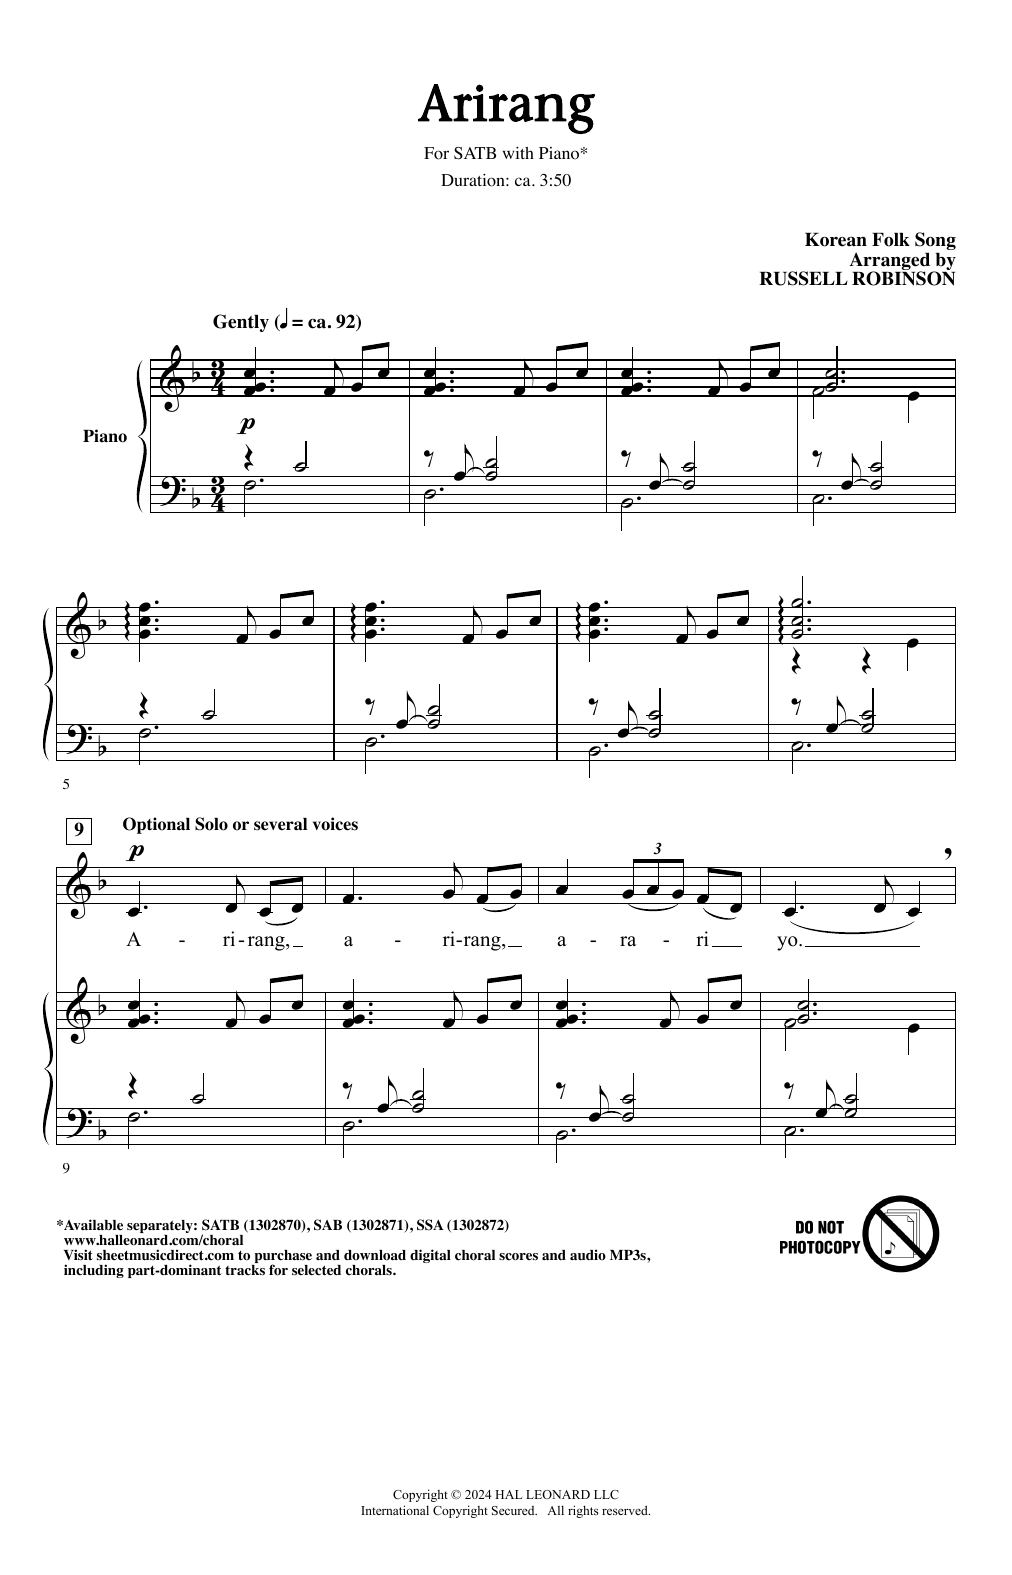 Korean folk song Arirang (arr. Russell Robinson) Sheet Music Notes & Chords for SSA Choir - Download or Print PDF